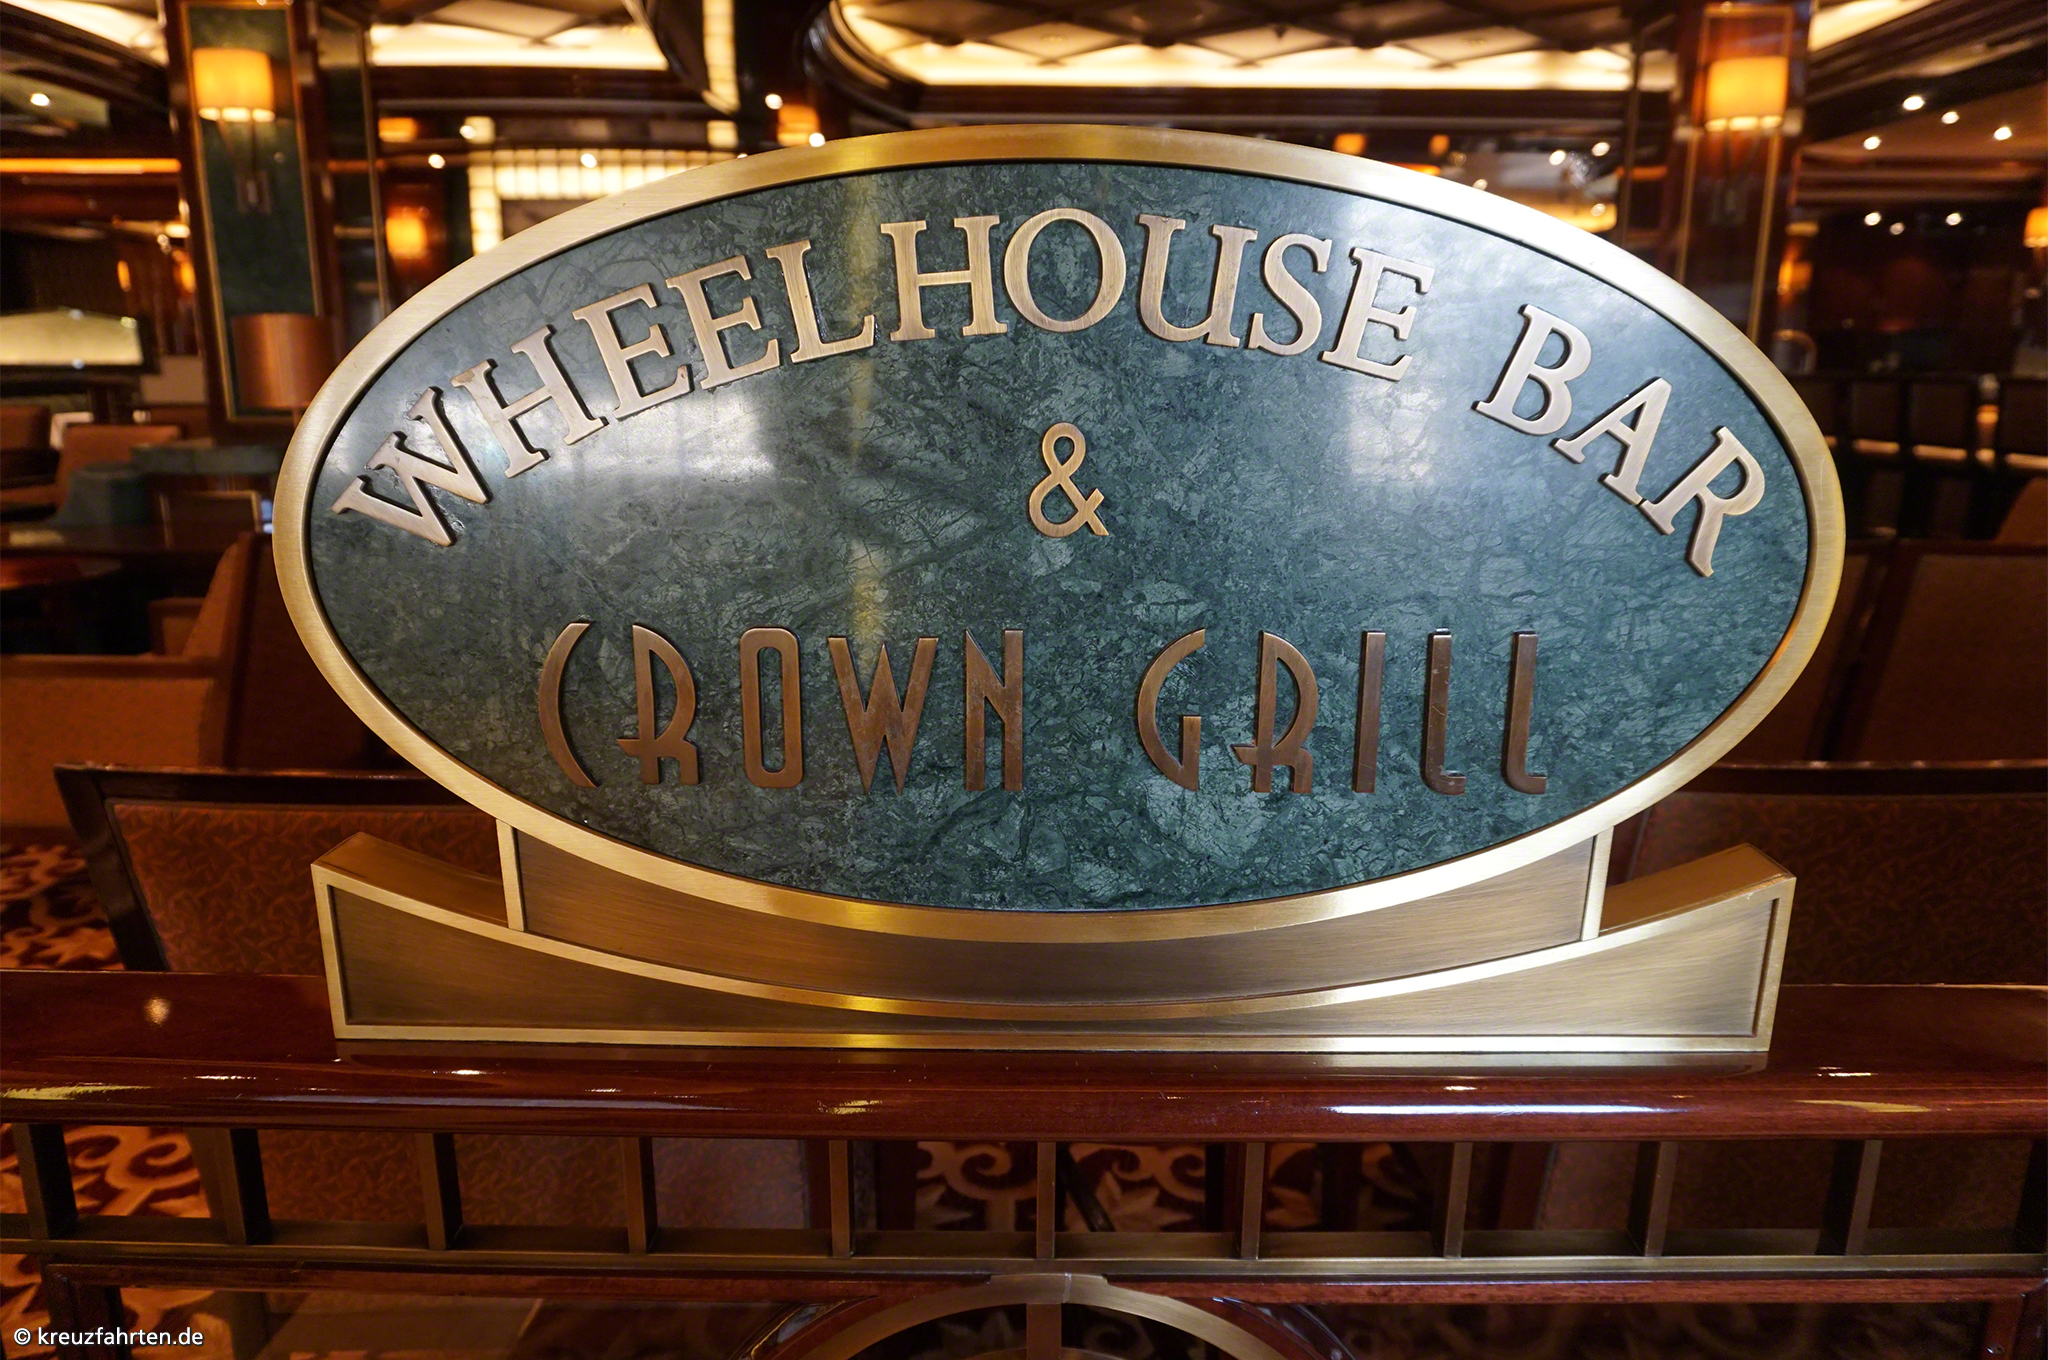 Wheelhouse Bar and Crown Grill